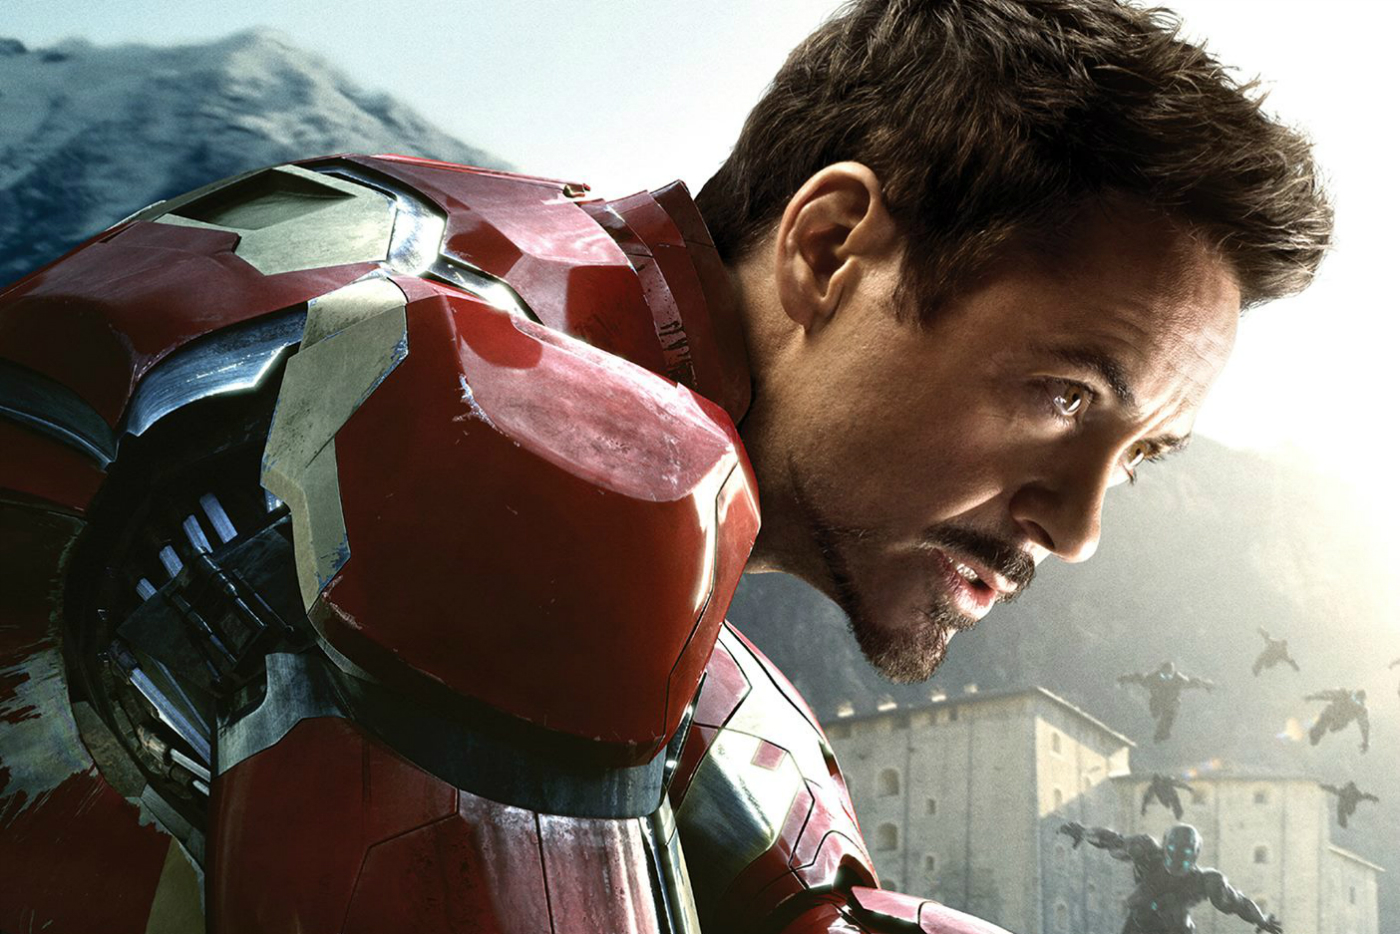 Robert Downey Jr. Had 1 Extreme Demand for Avengers: Endgame's Set